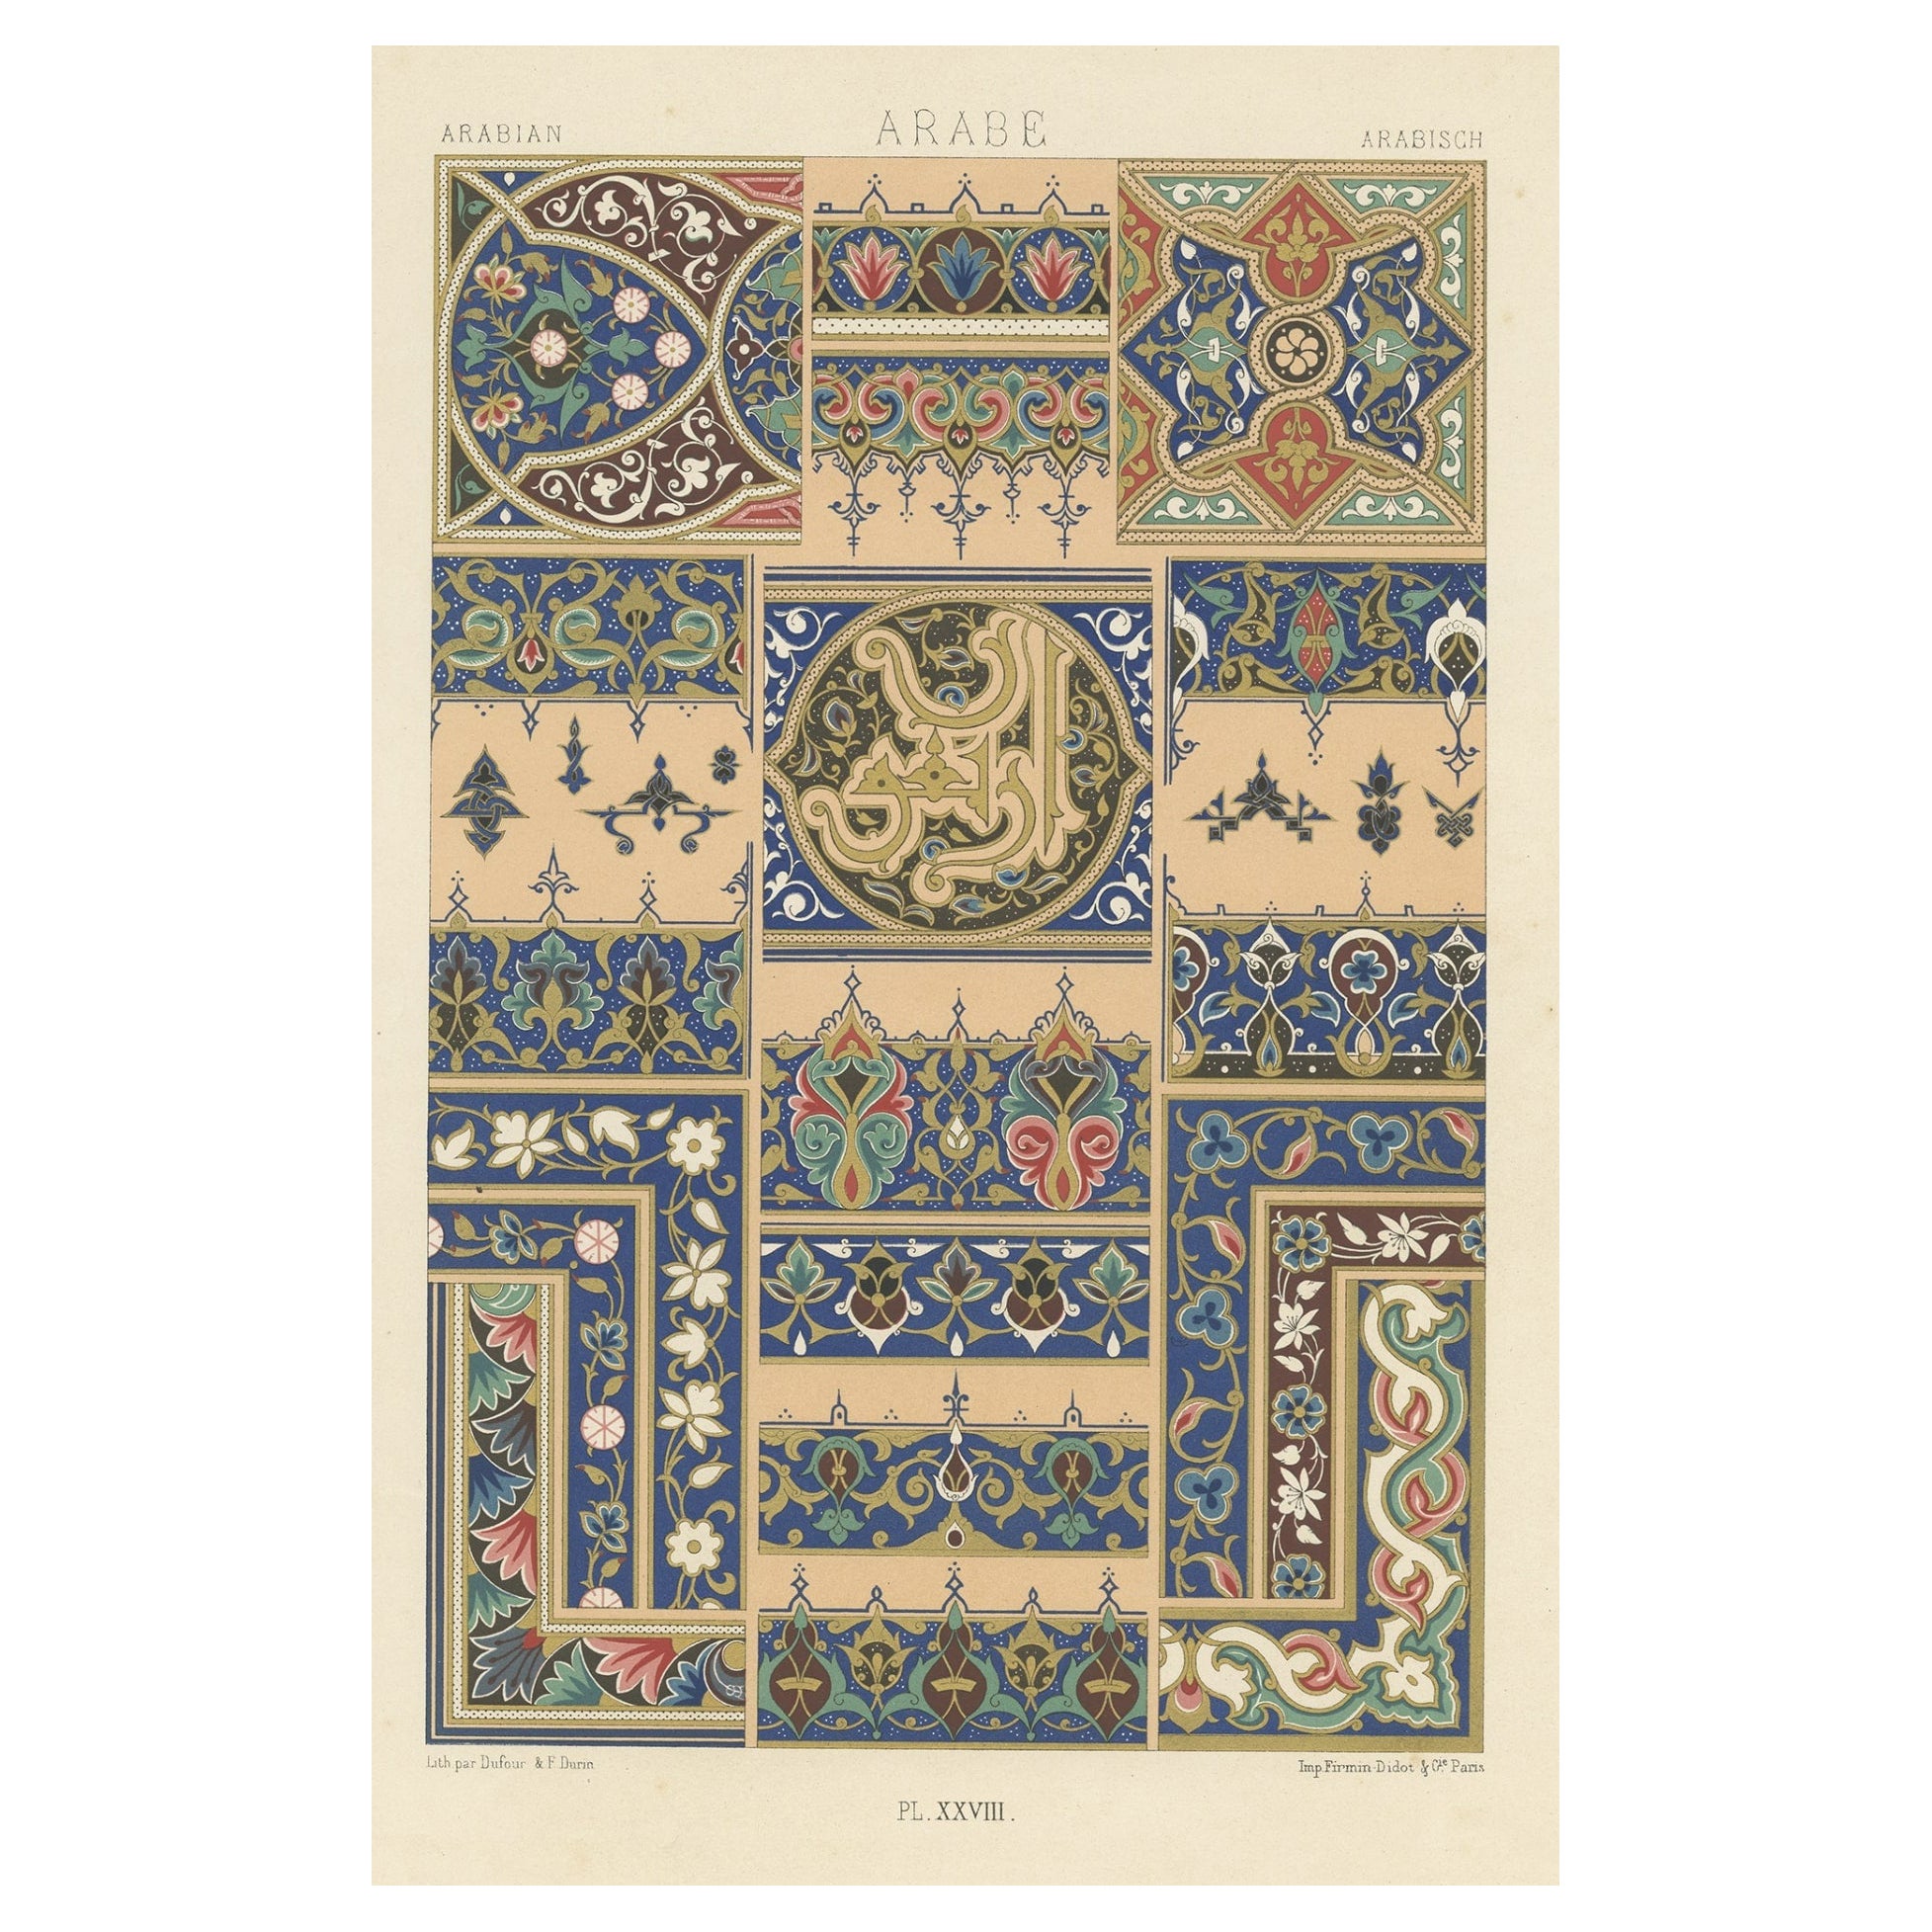 Old Original Print of Decorative Arabian Art or Arabian Ornaments, 1869